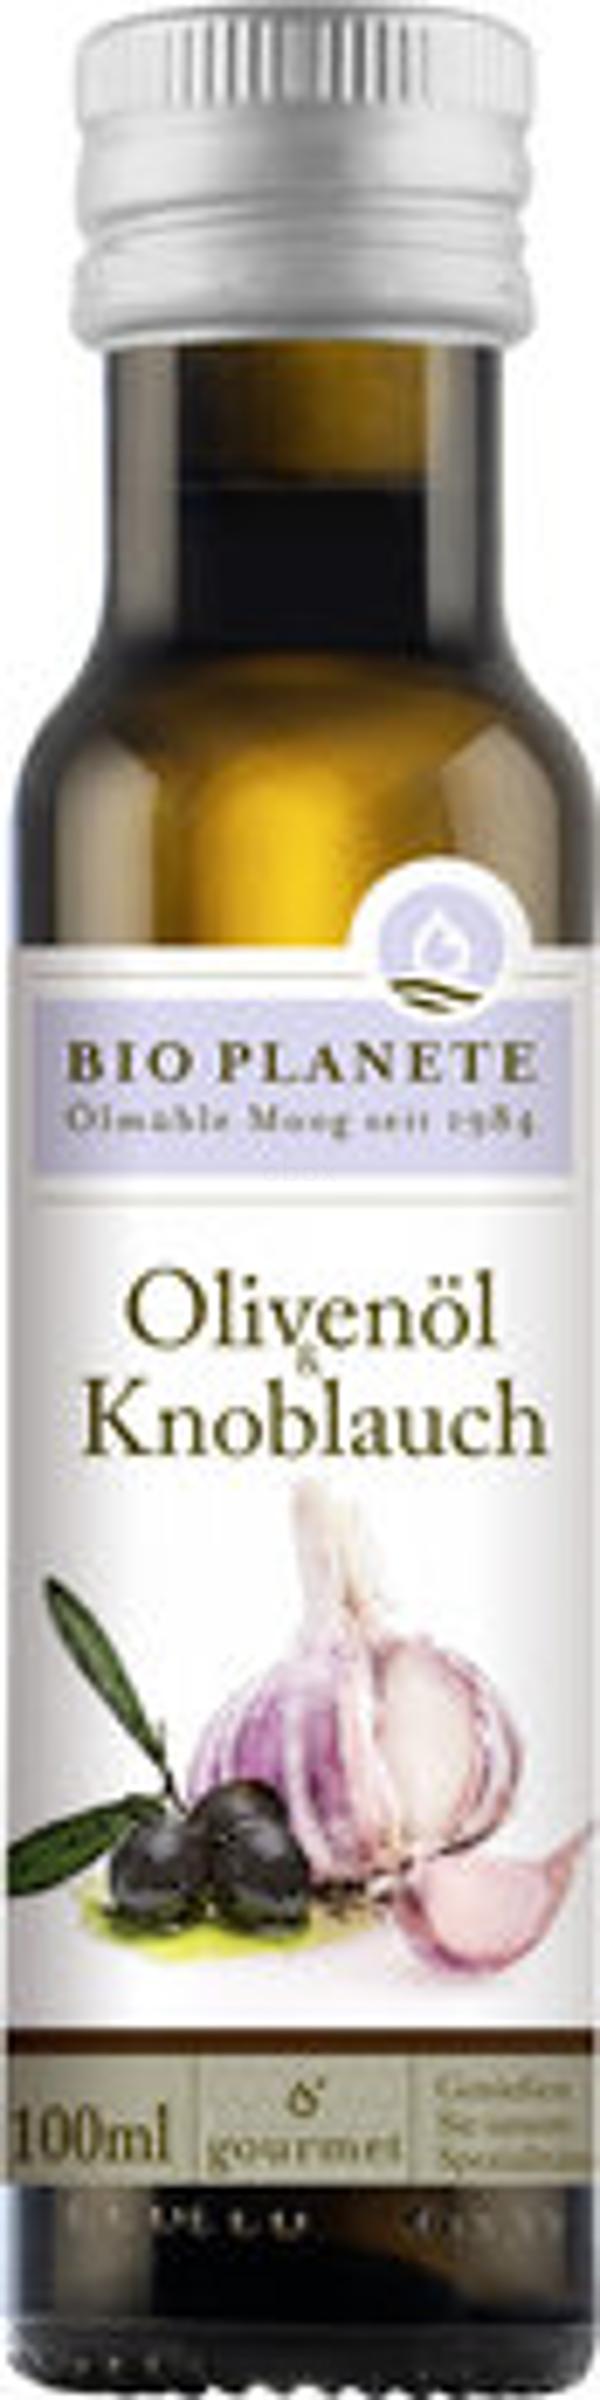 Produktfoto zu Olivenöl & Knoblauch